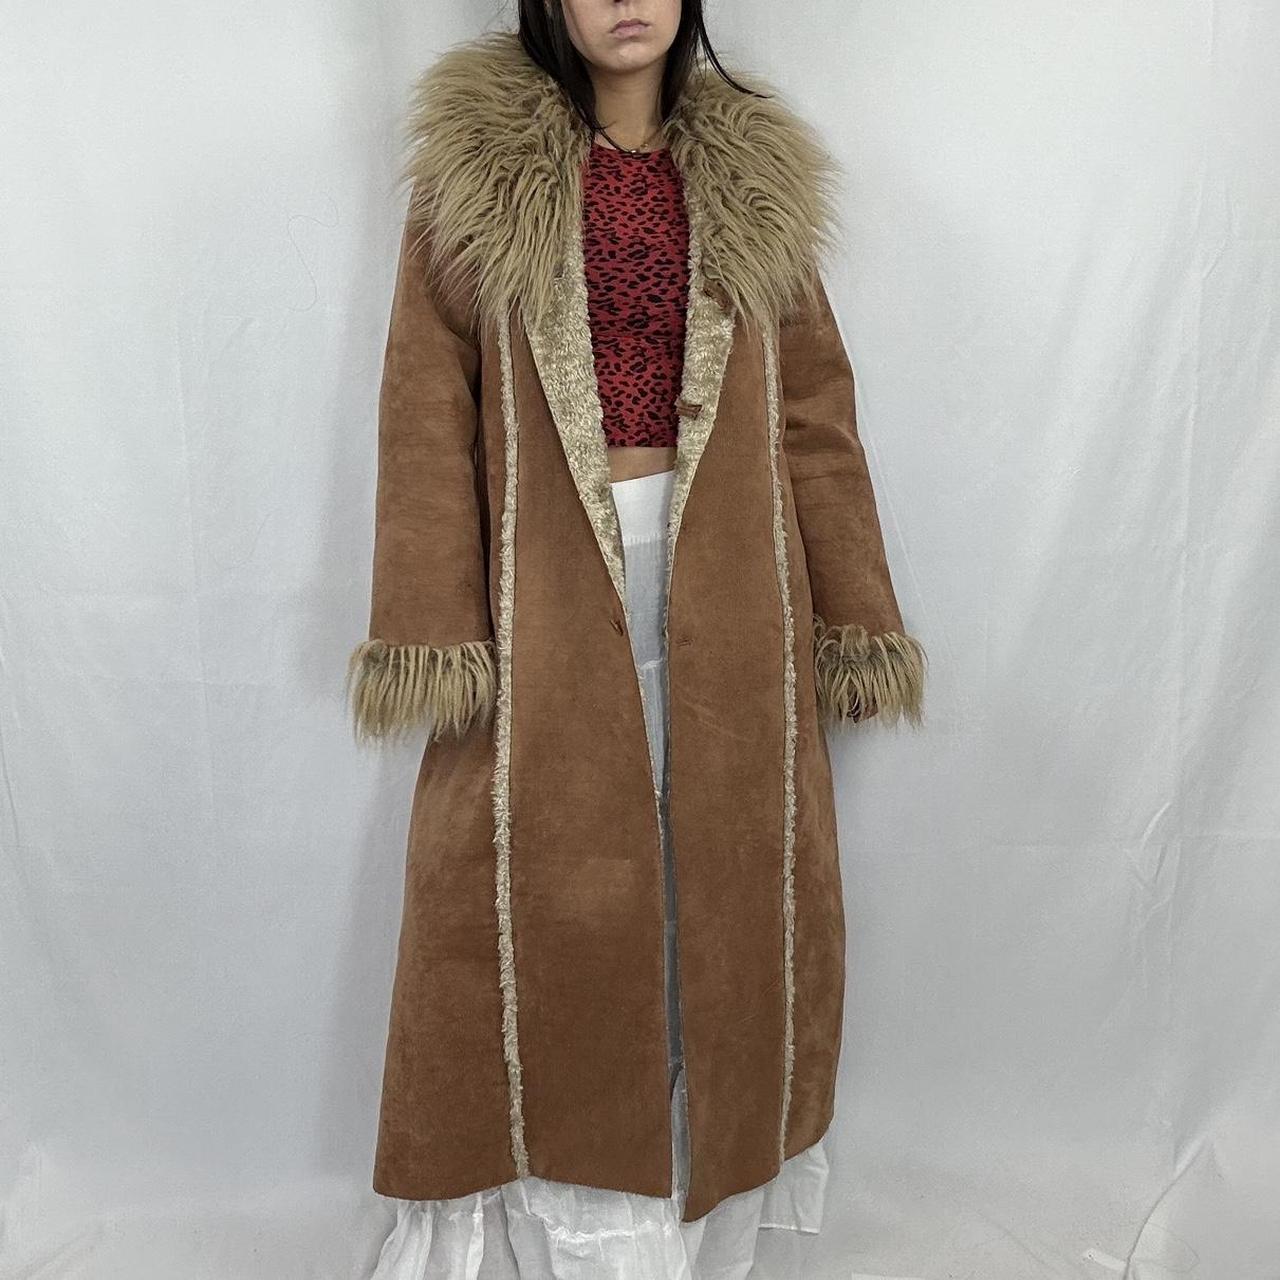 Vintage Fur Penny Lane Coat amazing condition -... - Depop